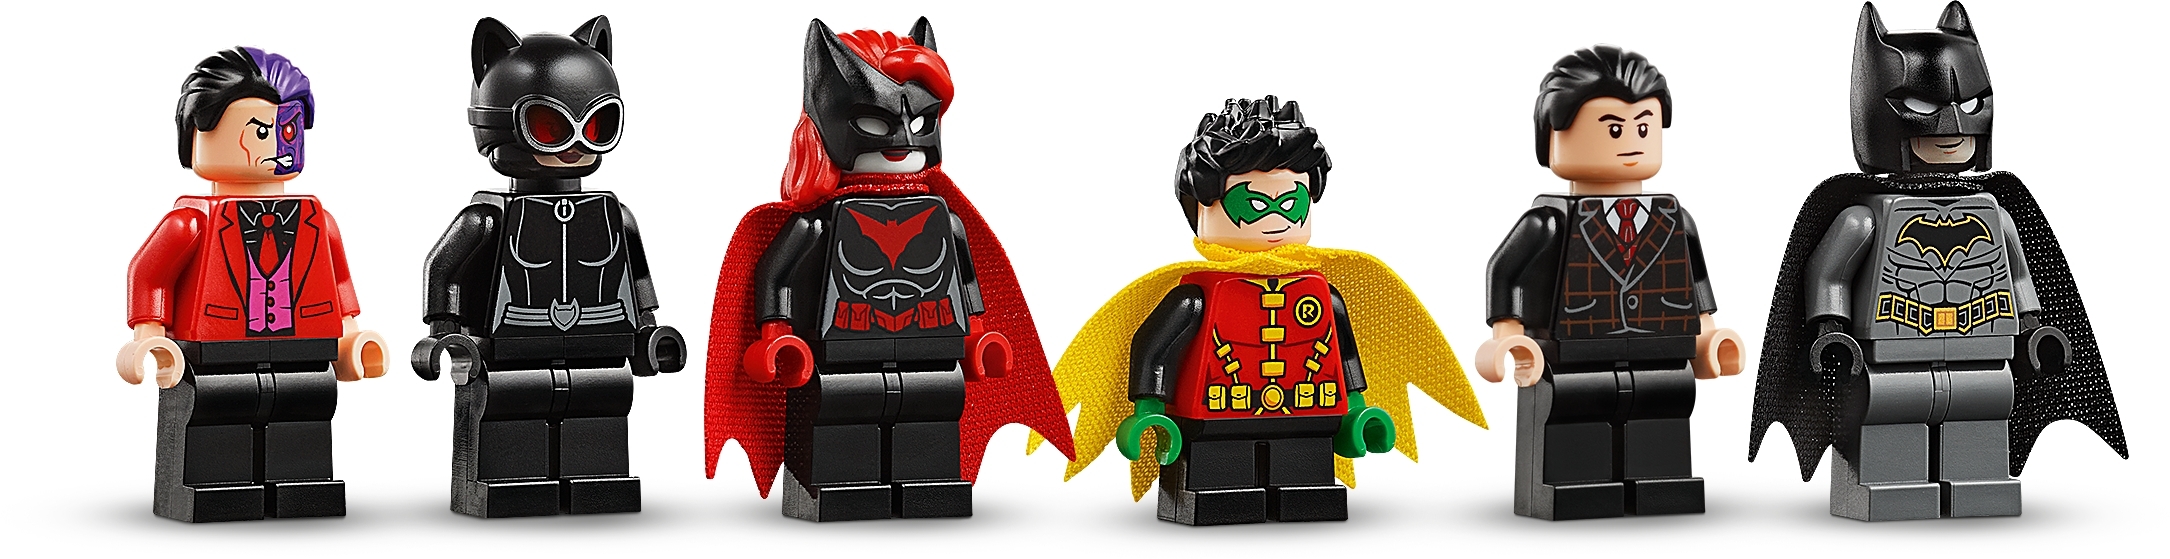 LEGO DC Batman Batcave Clayface Invasion 76122 Batman Toy Building Kit with  Batman and Bruce Wayne Action Minifigures, Popular DC Superhero Toy (1037